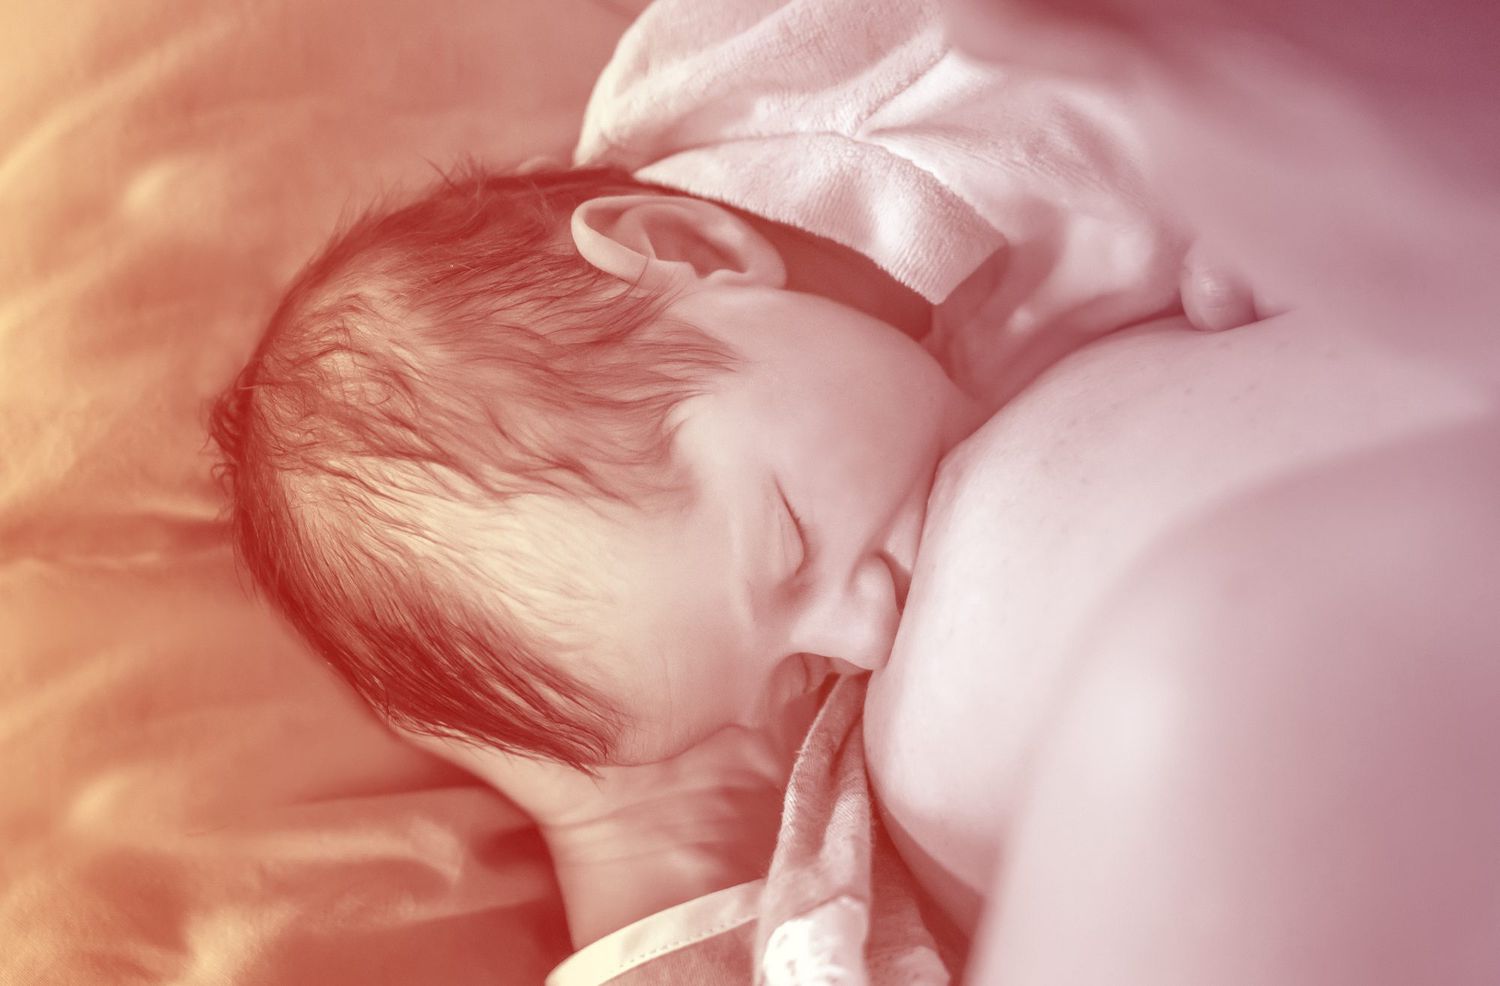 Newborn baby breastfeeding in hospital